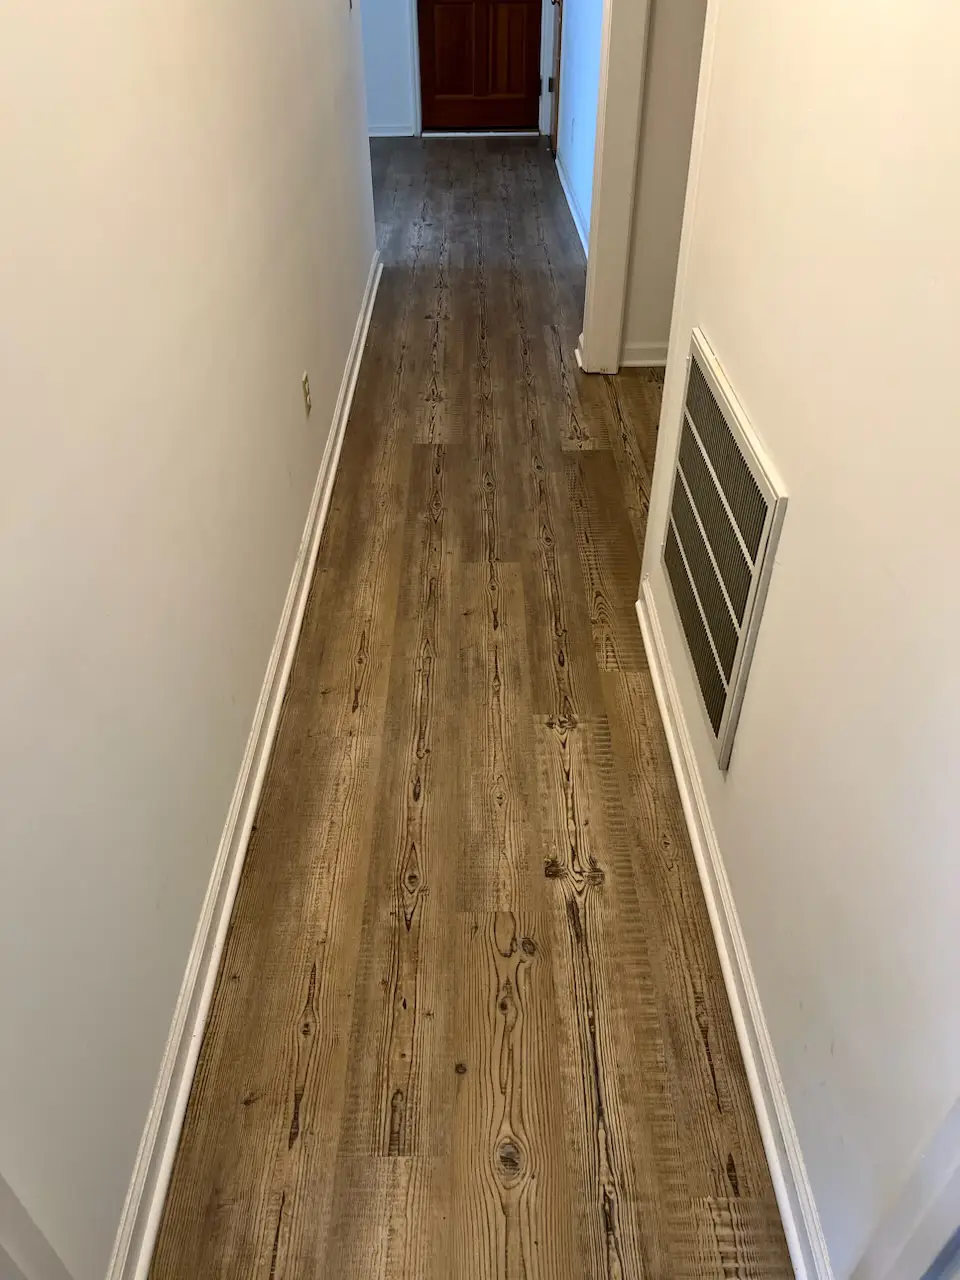 Triangle Flooring - Hallway wood flooring install